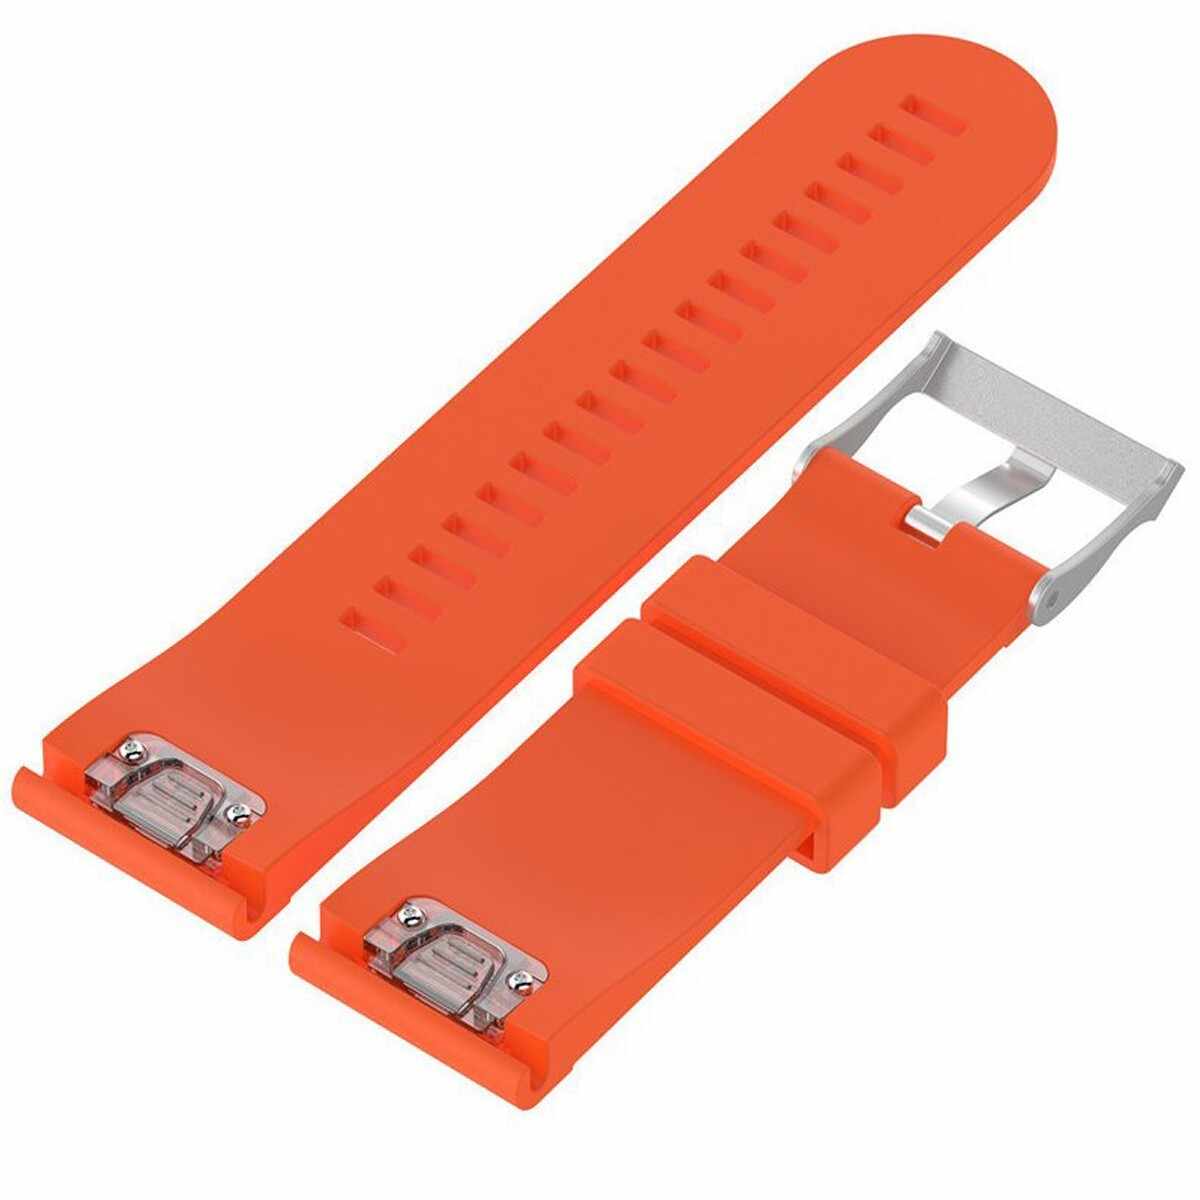 Curea ceas Smartwatch Garmin Fenix 5, 22 mm Silicon iUni Orange